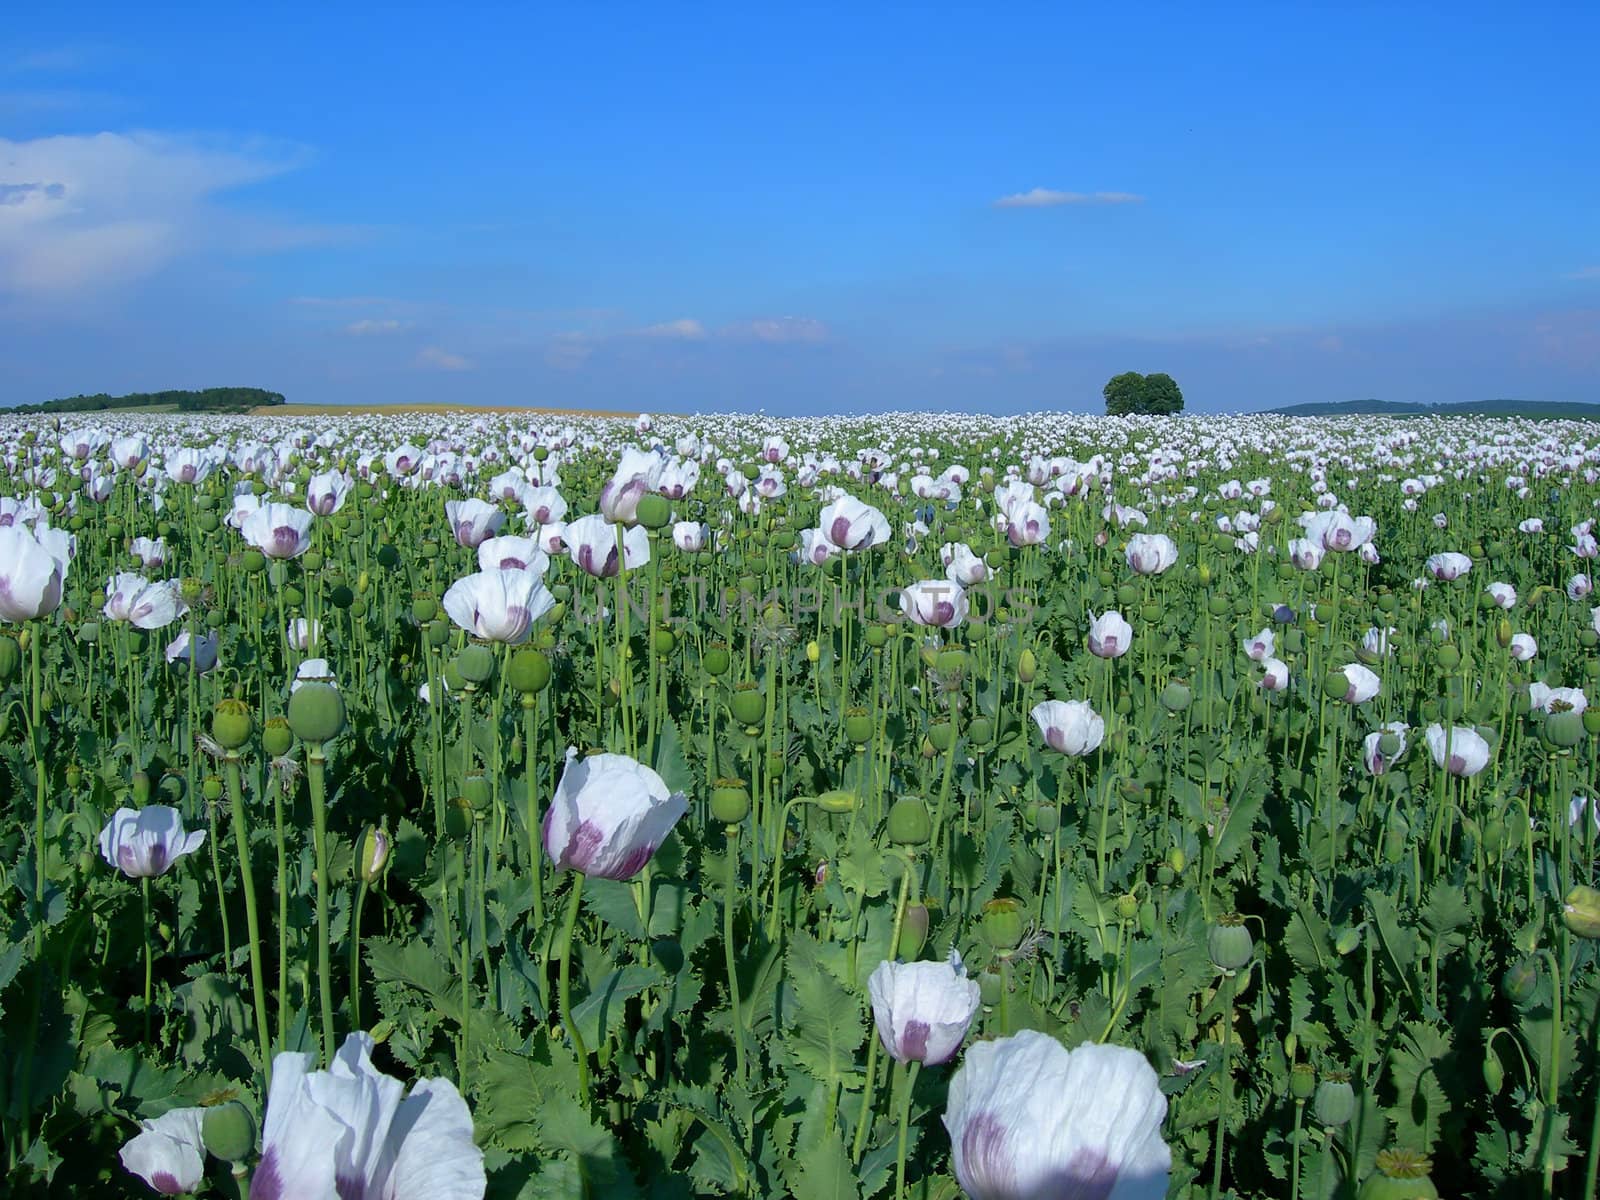           Field full of beautiful white blooming poppy